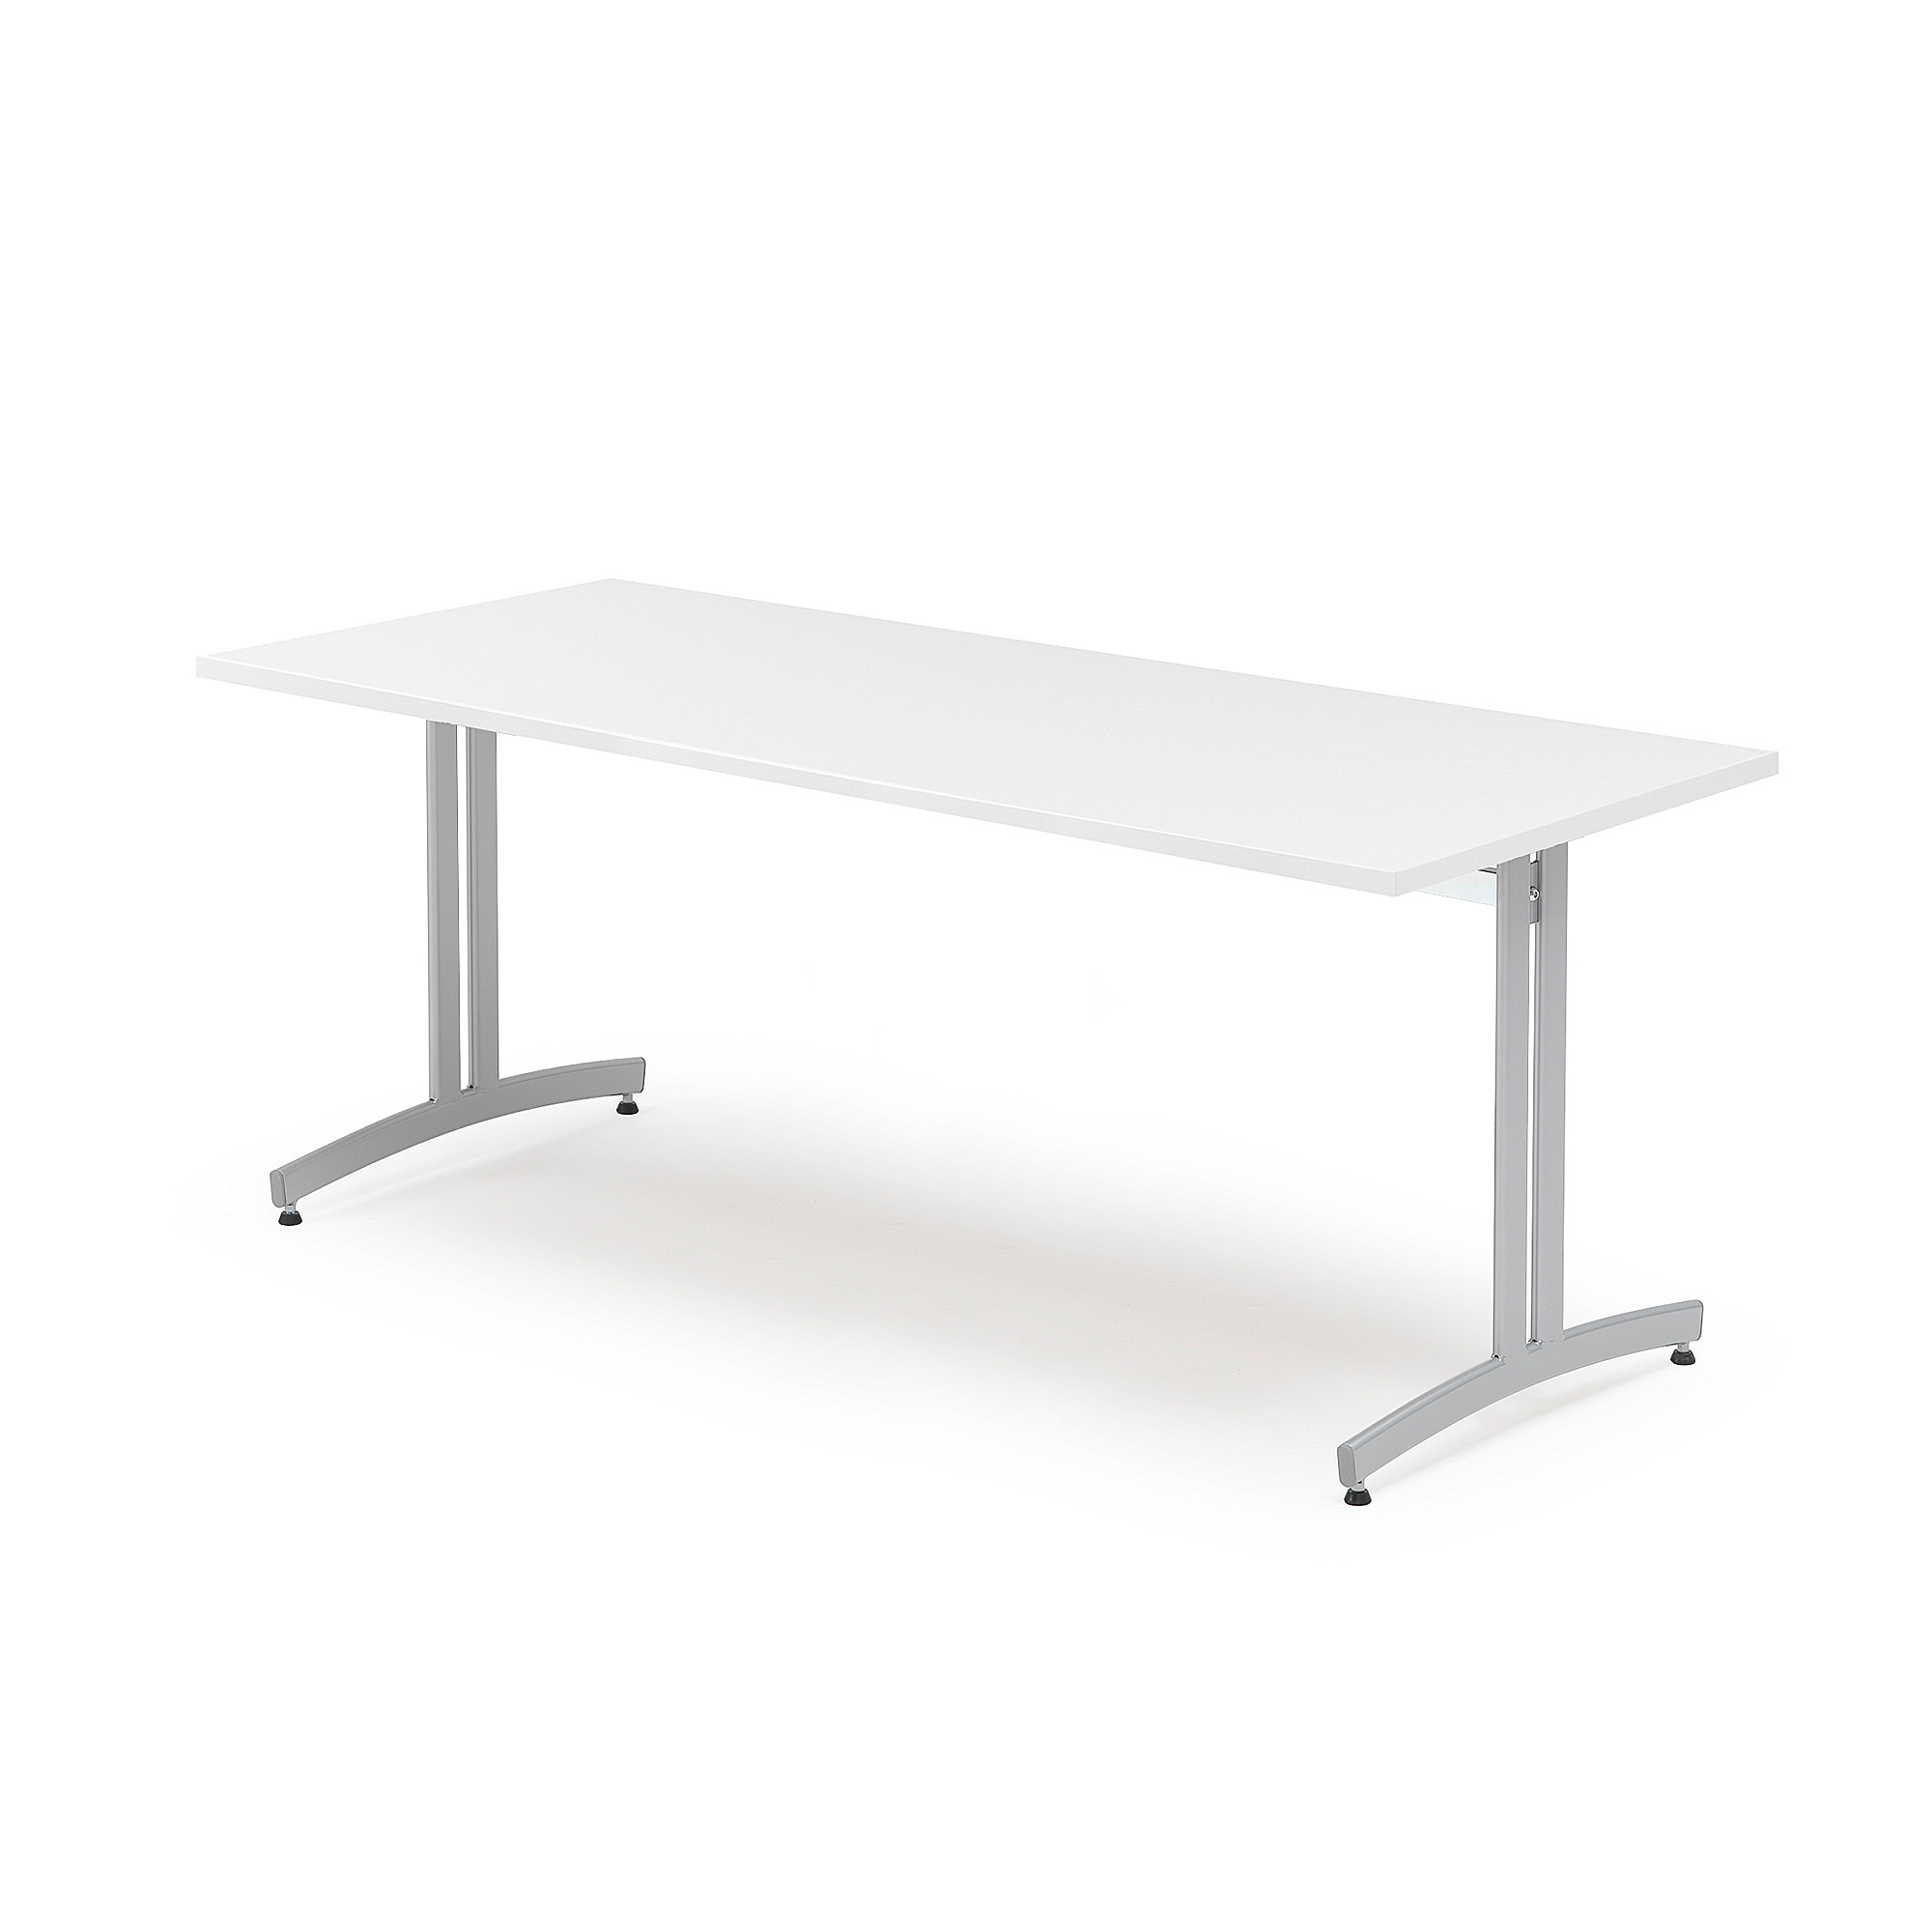 Jedálenský stôl SANNA, 1800x800 mm, biely, šedá podnož